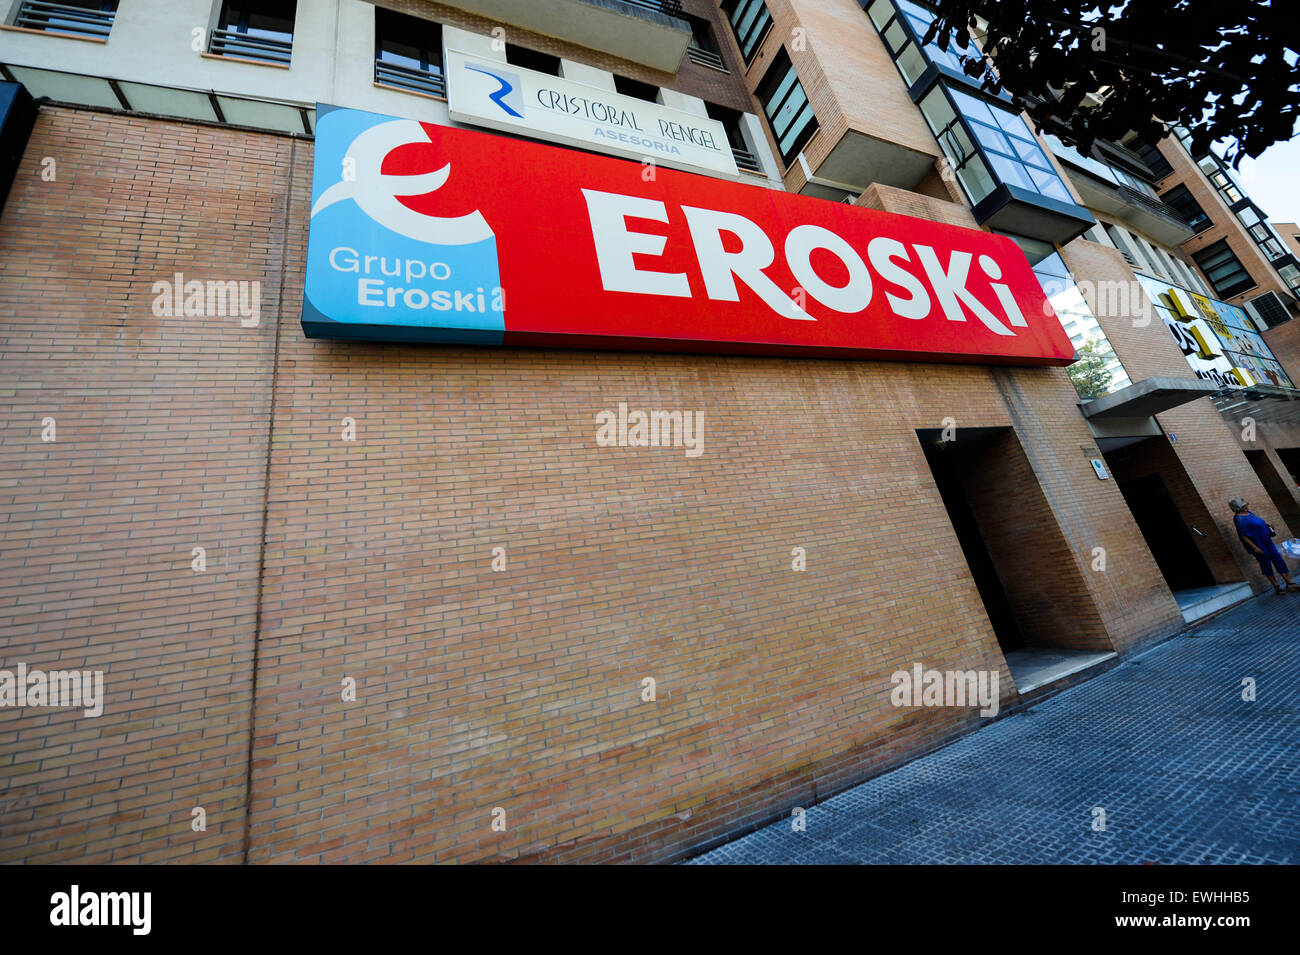 Eroski Super Market Stock Photo